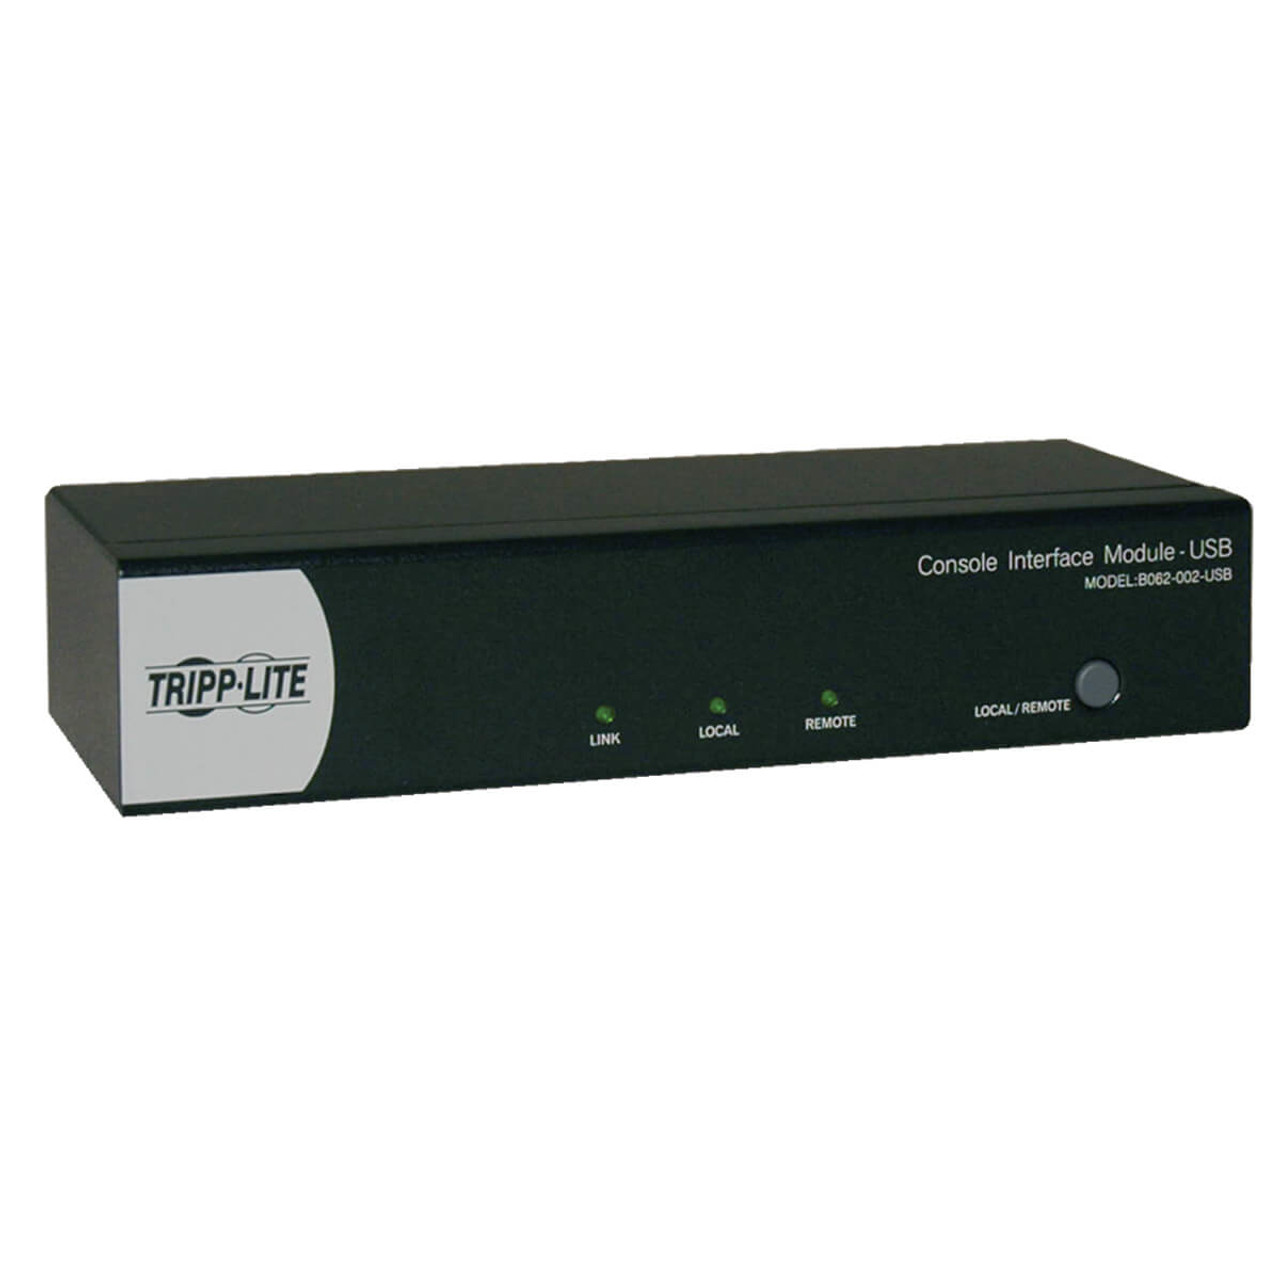 B062-002-USB | Tripp Lite | KVM switch Black